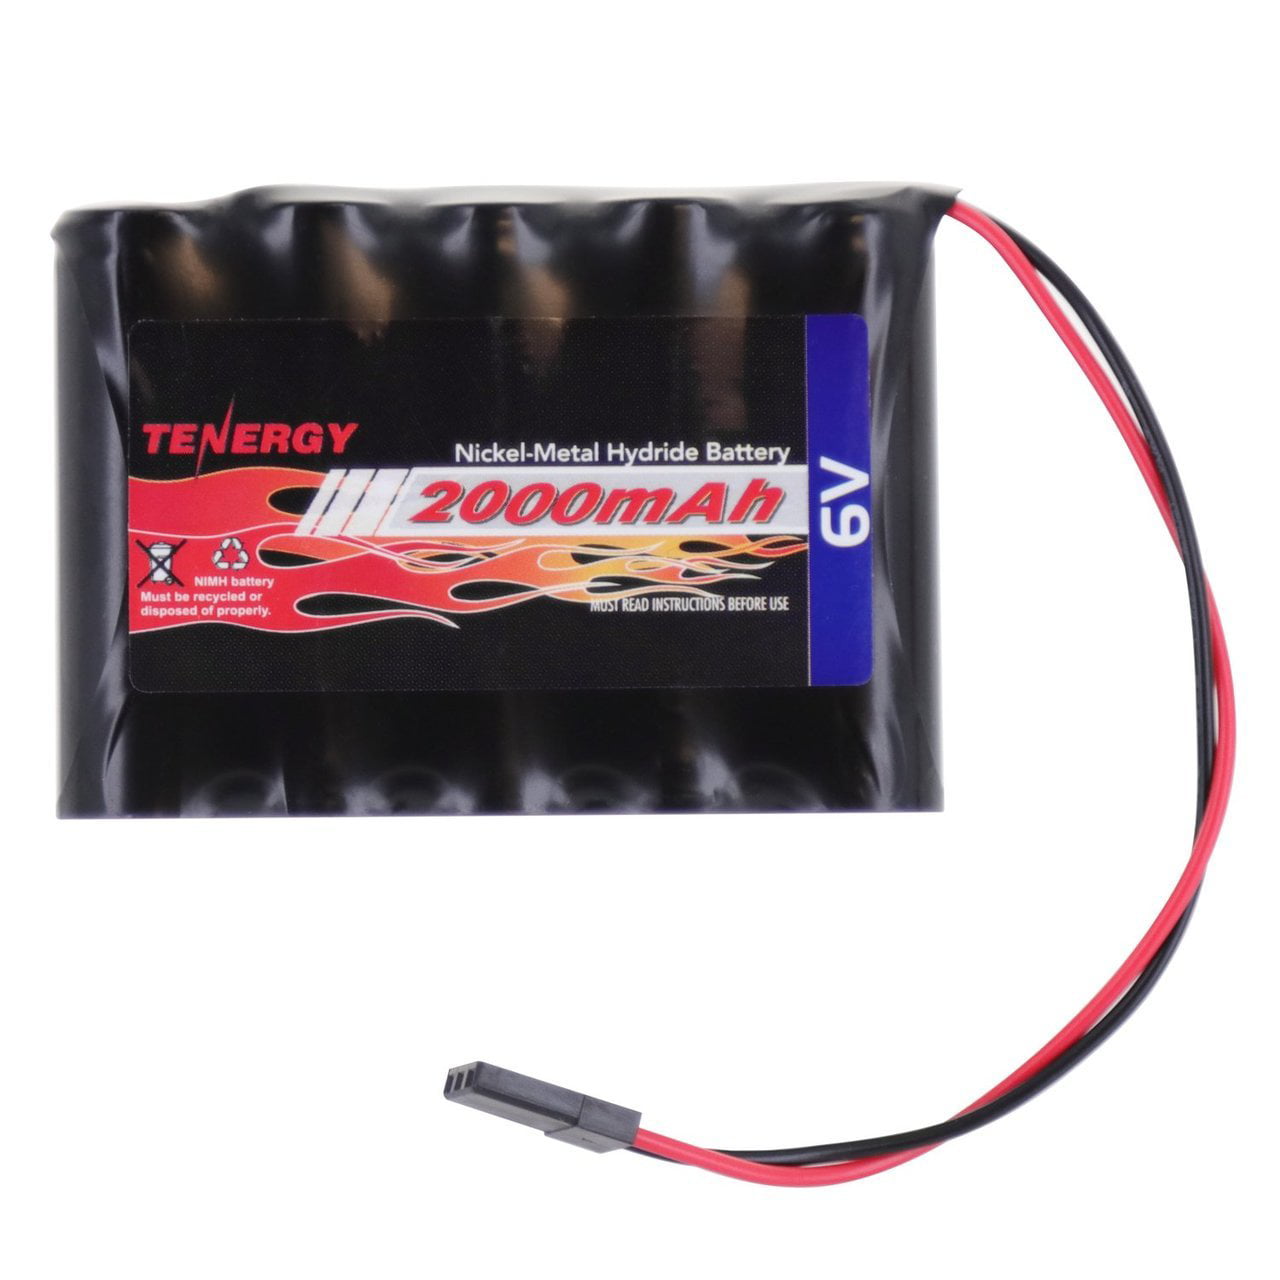 6 volt receiver battery pack